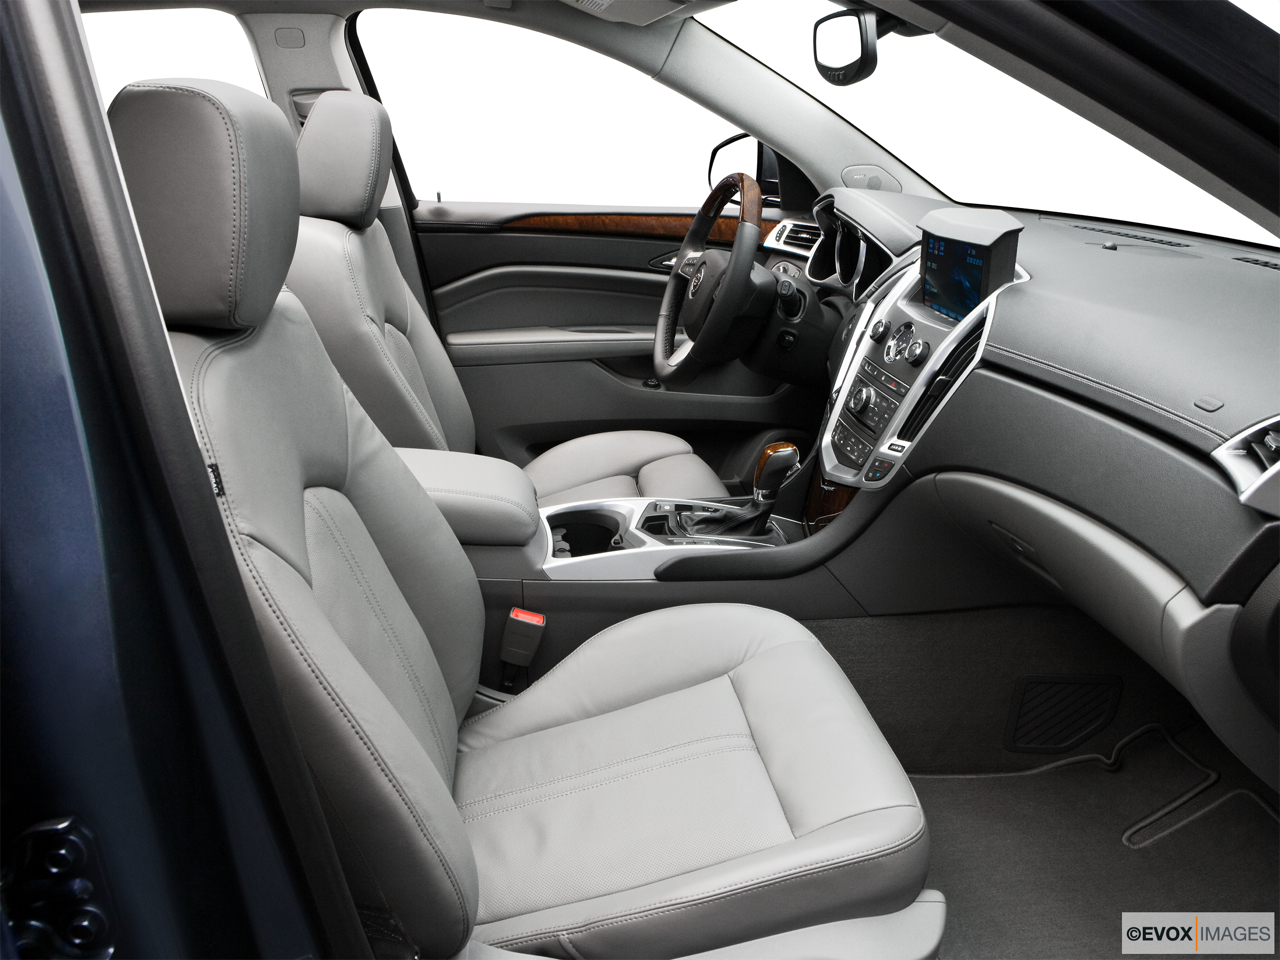 2010 Cadillac SRX Crossover Premium Collection Passenger seat. 